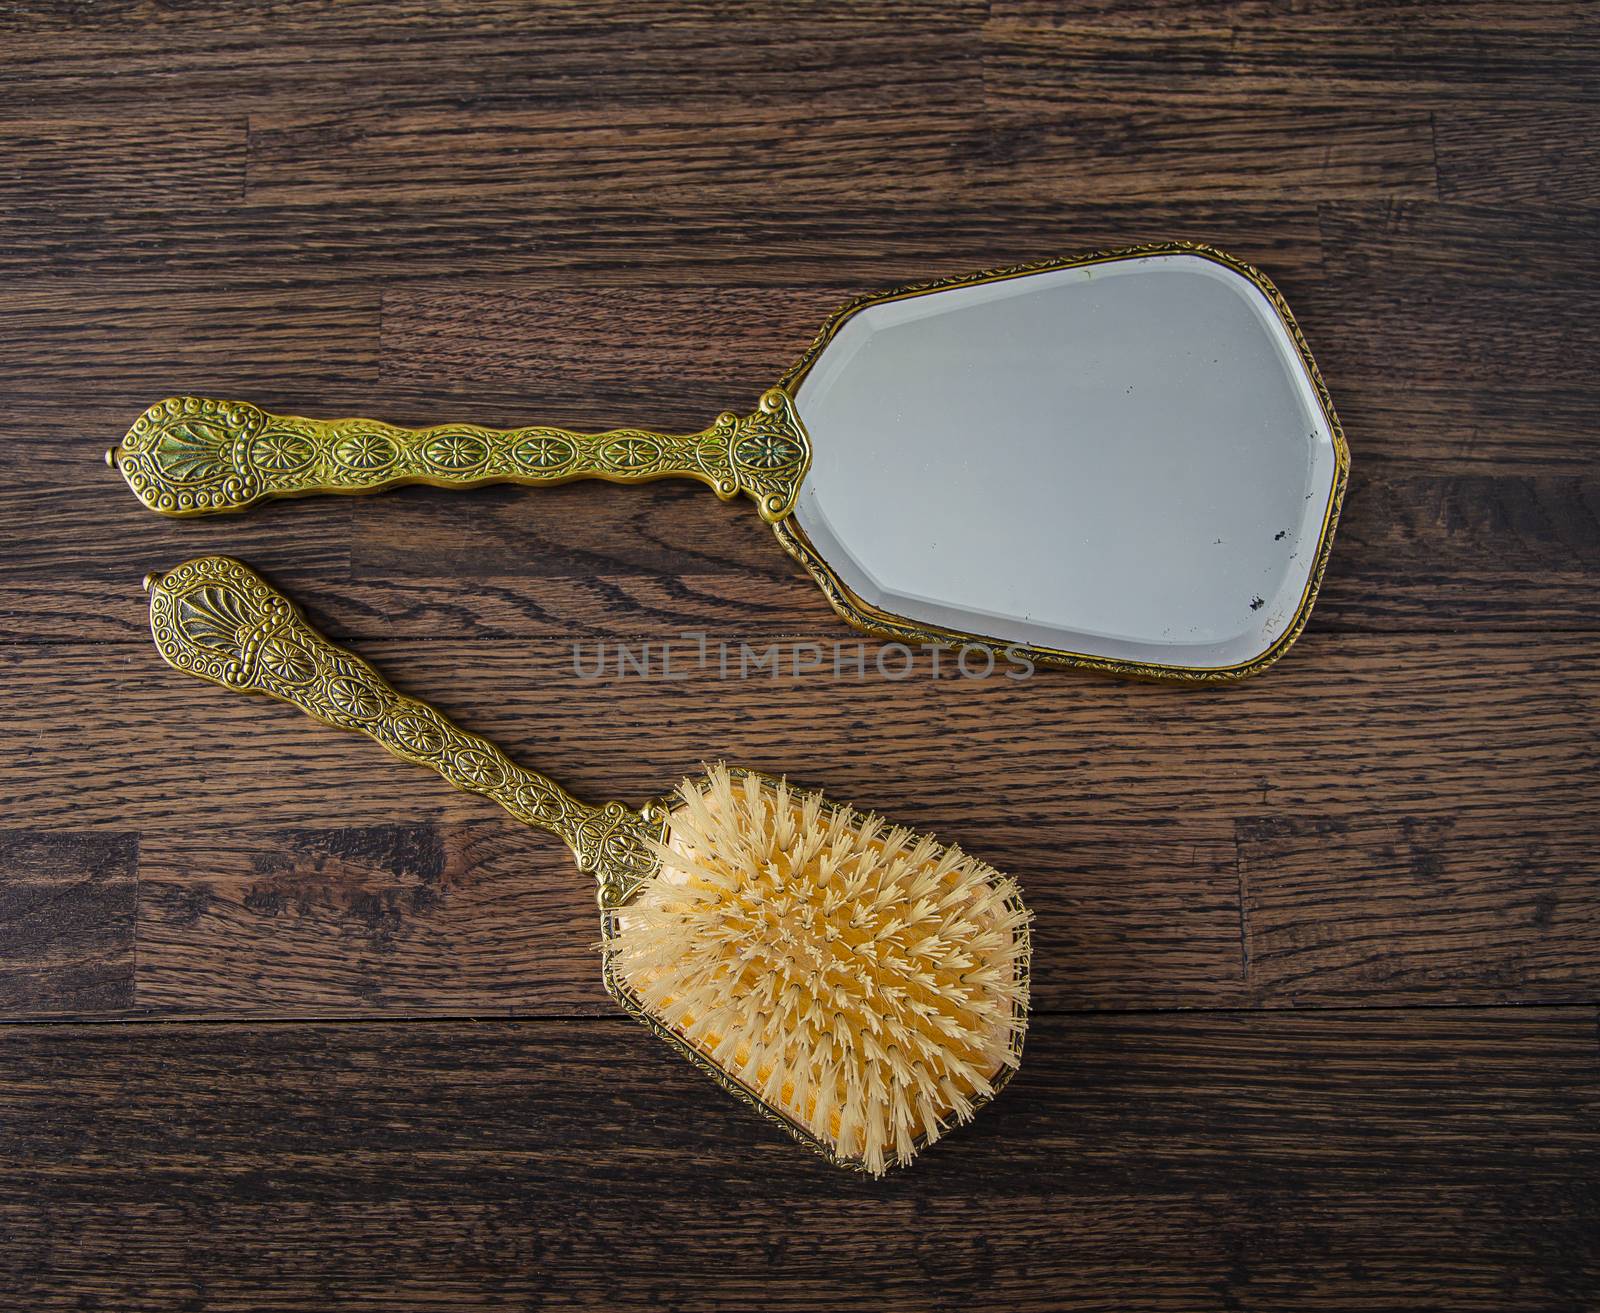 Antique hair brush and hair mirror on a dark oak wood background
